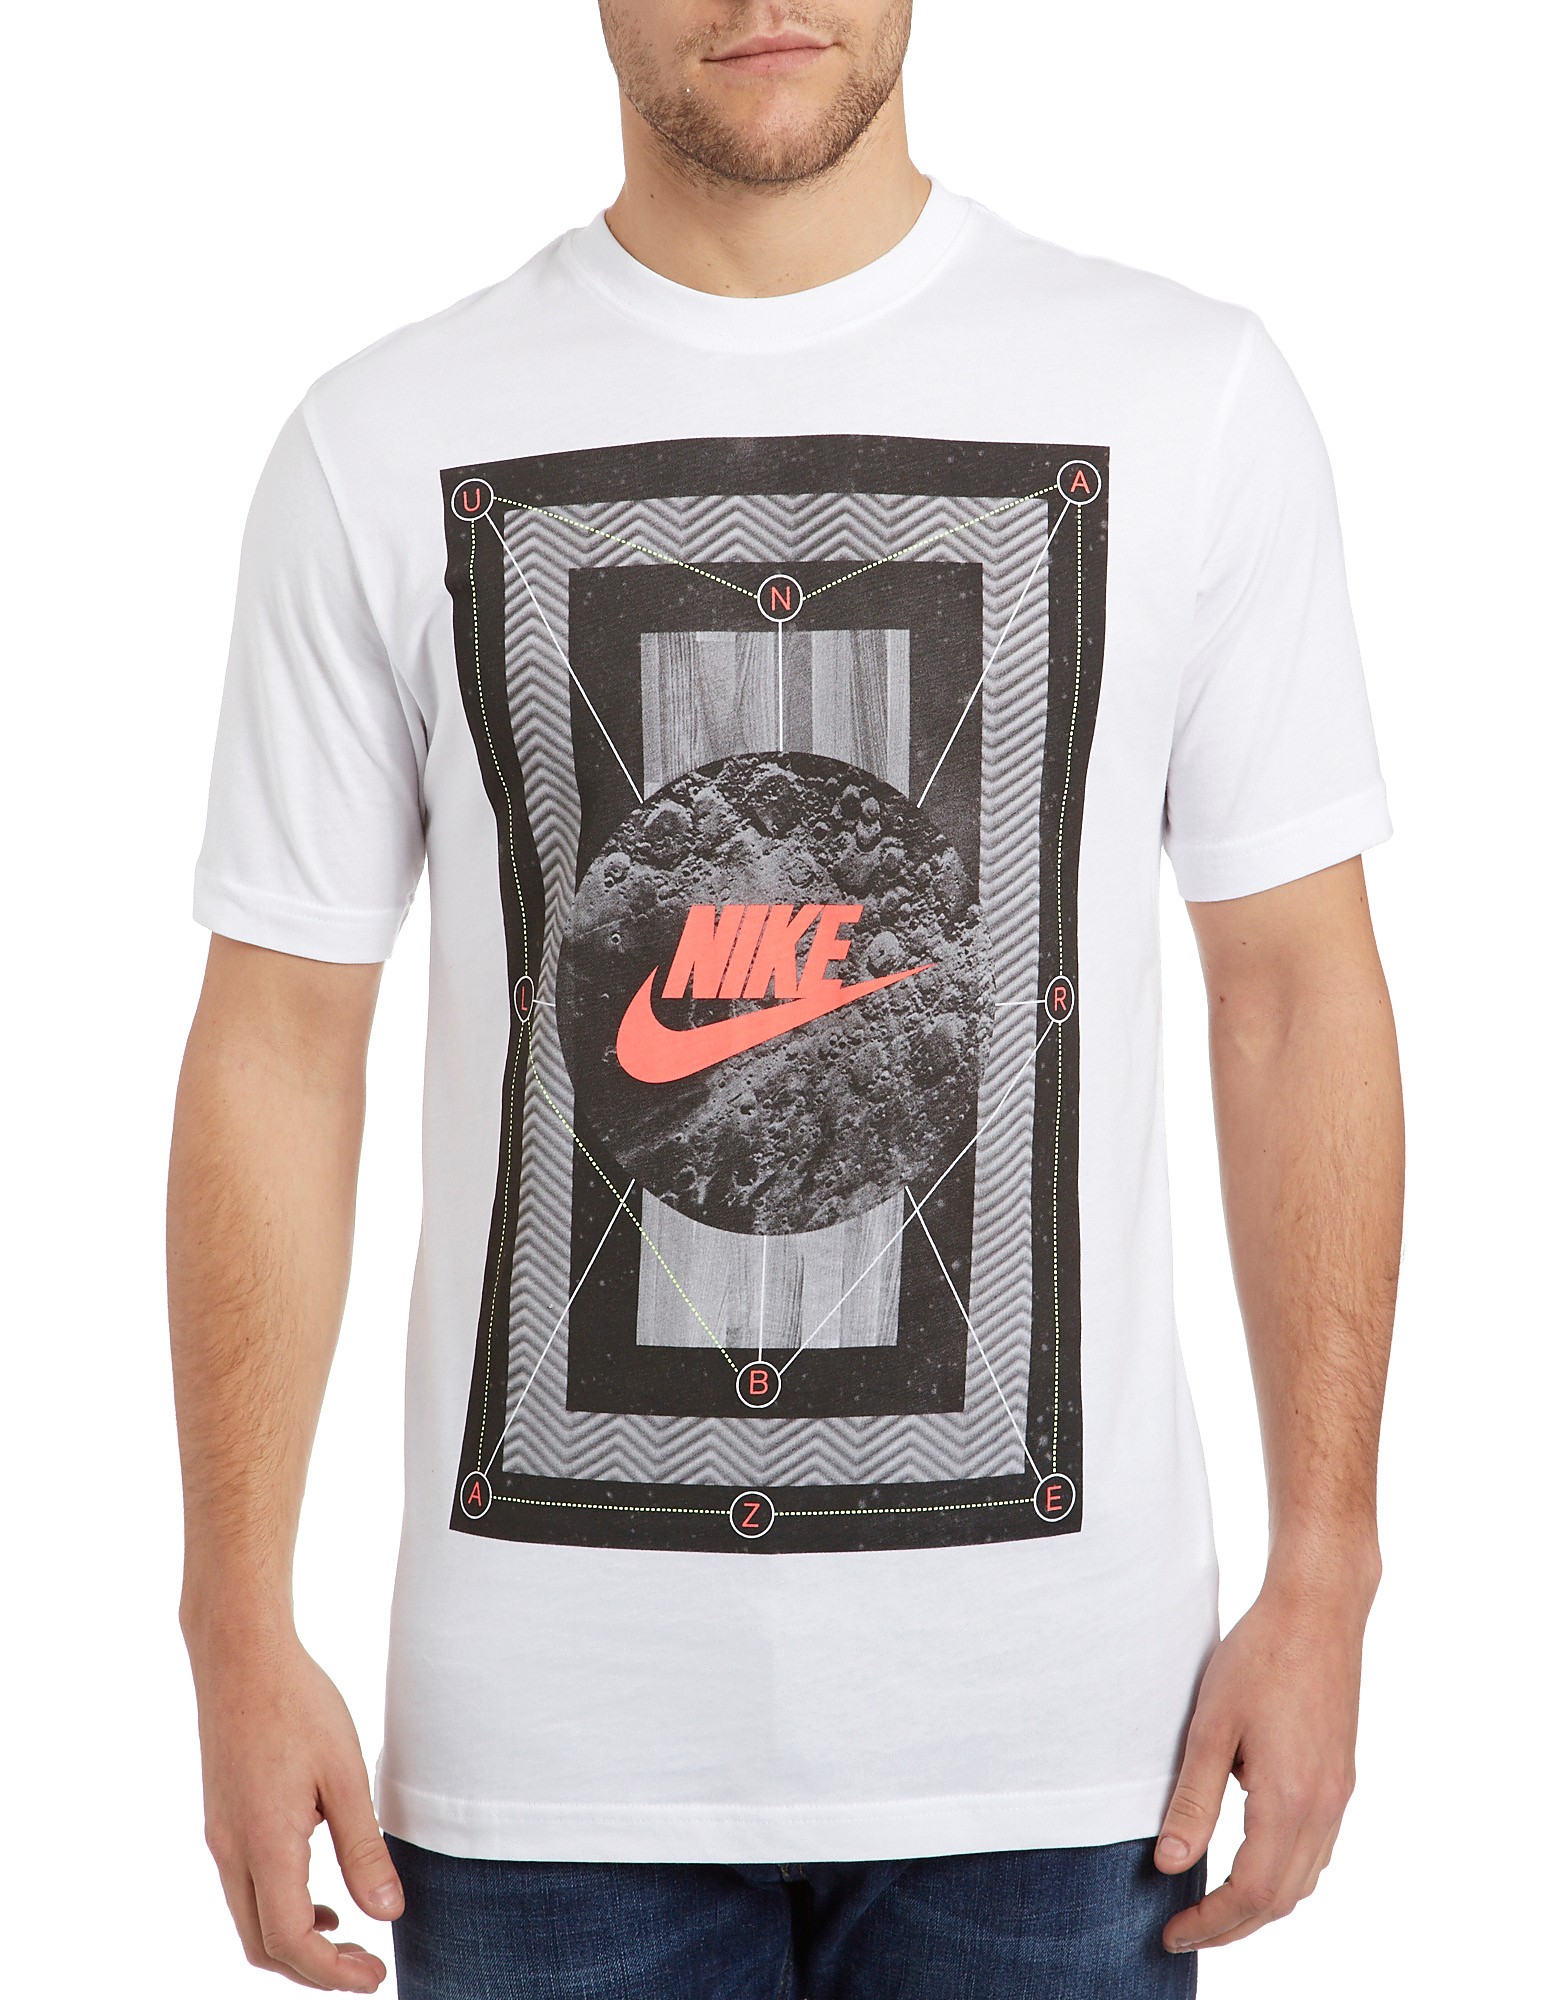 Nike Lunar Blazer T-Shirt